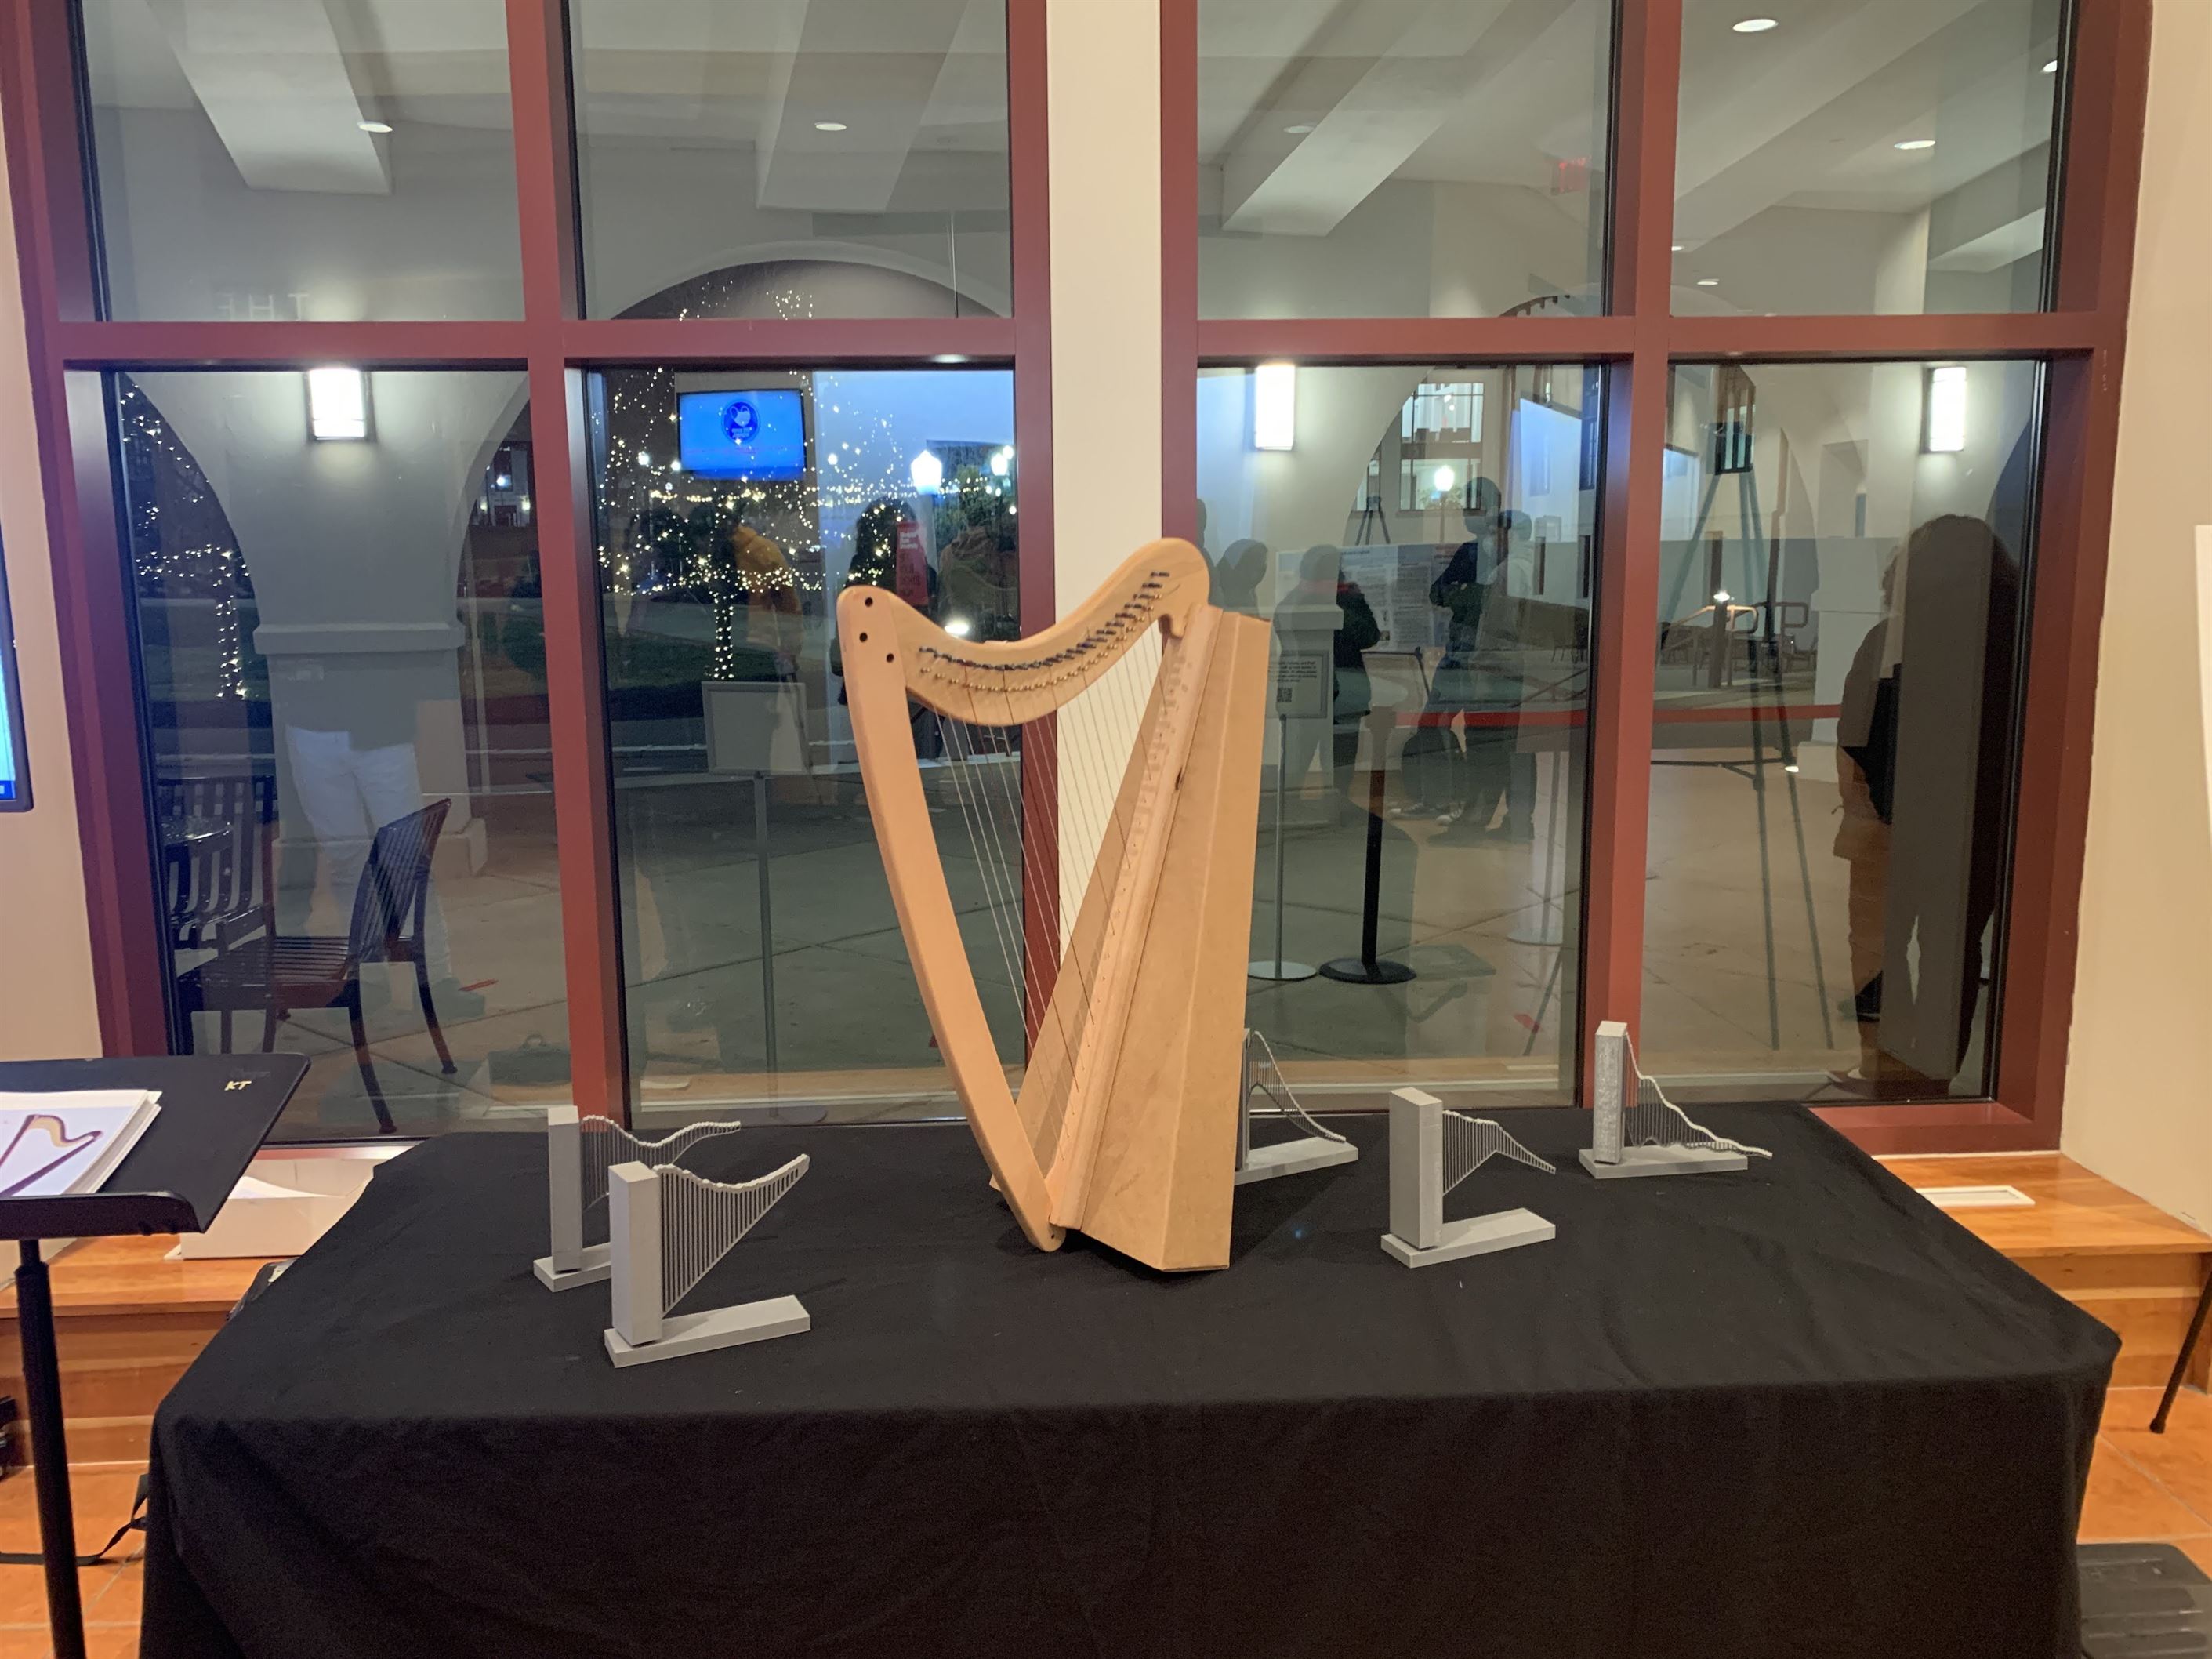 3D printed models of new harp shapes next to a traditional harp. Photo courtesy of Bogdan Nita